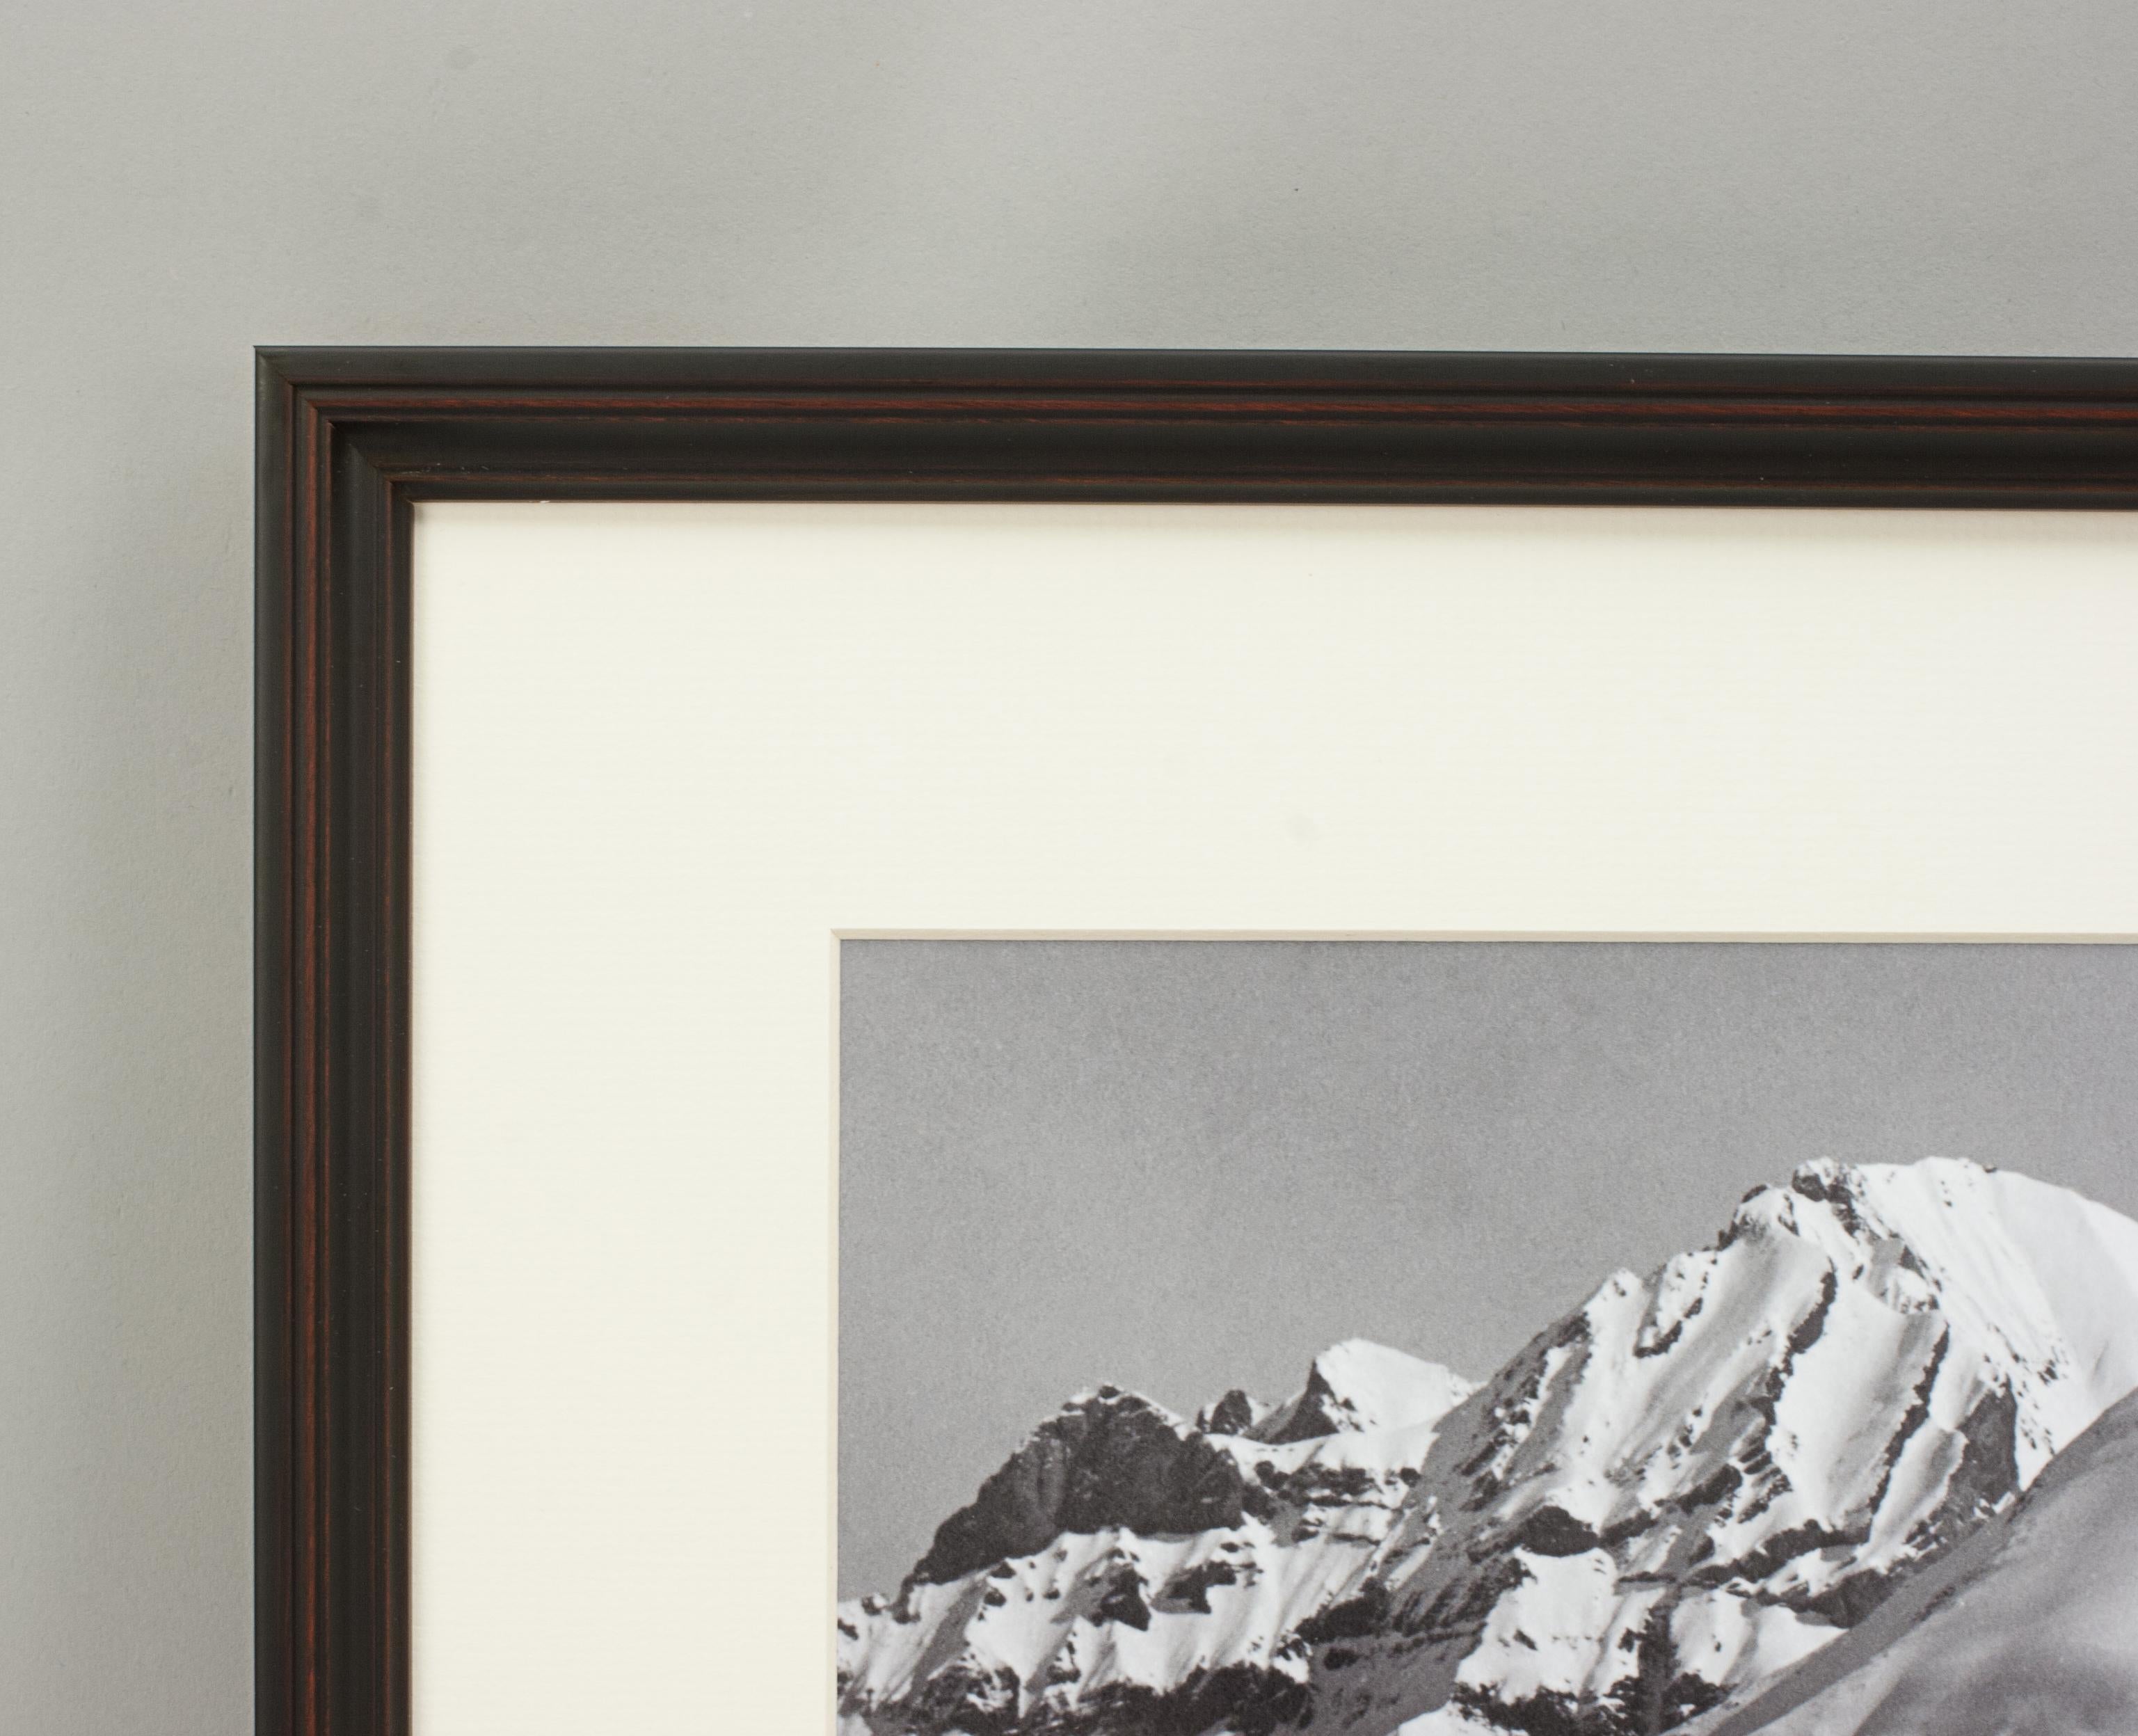 Alpine Ski Photograph, 'Three Peaks' Taken from 1930s Original For Sale 2